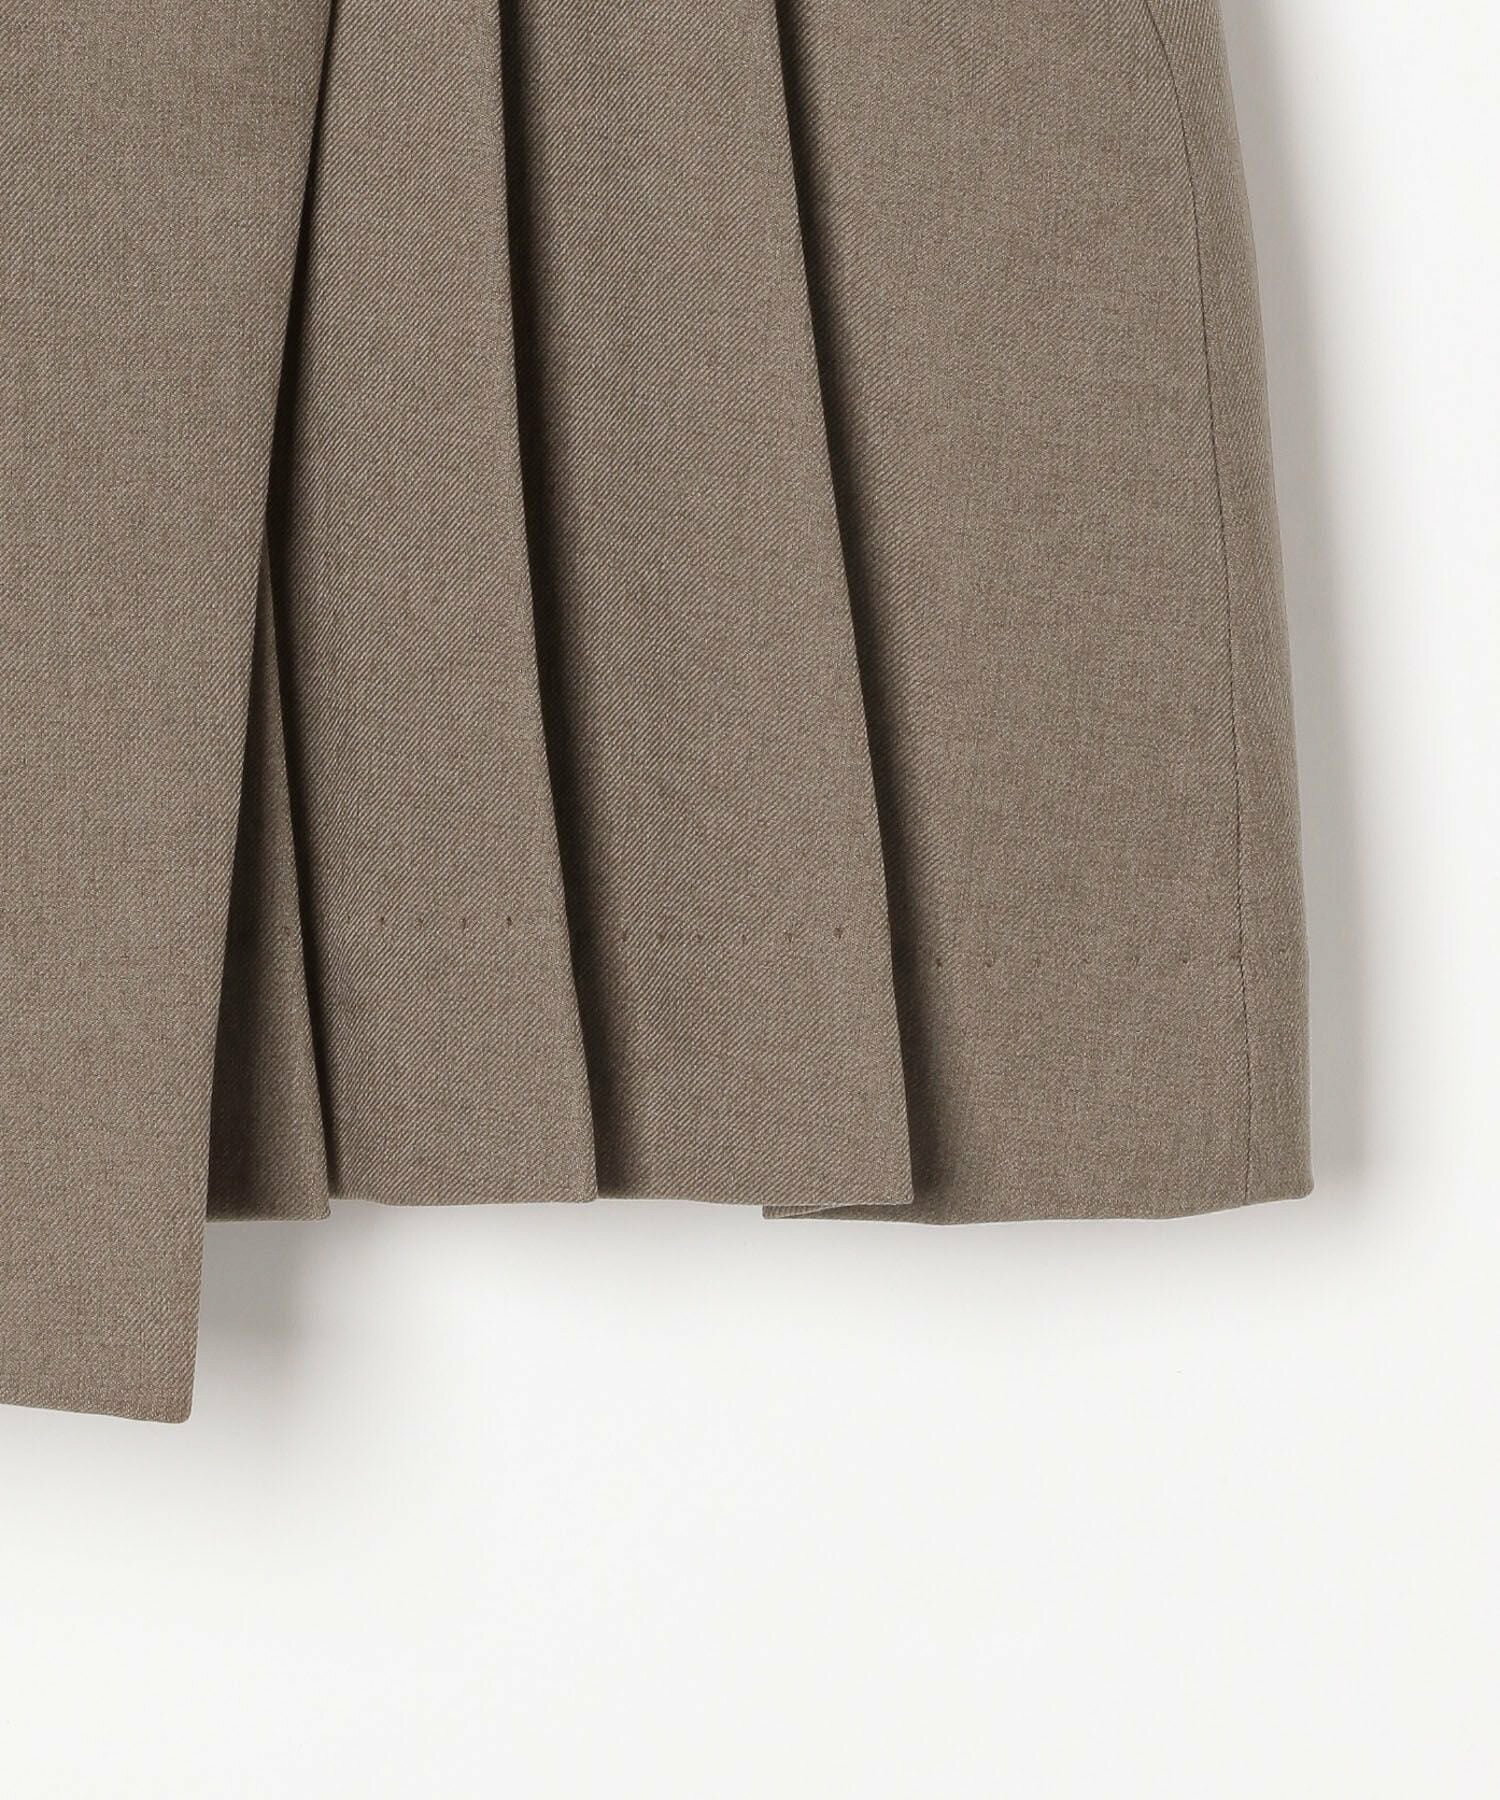 Design Pleated Skirt